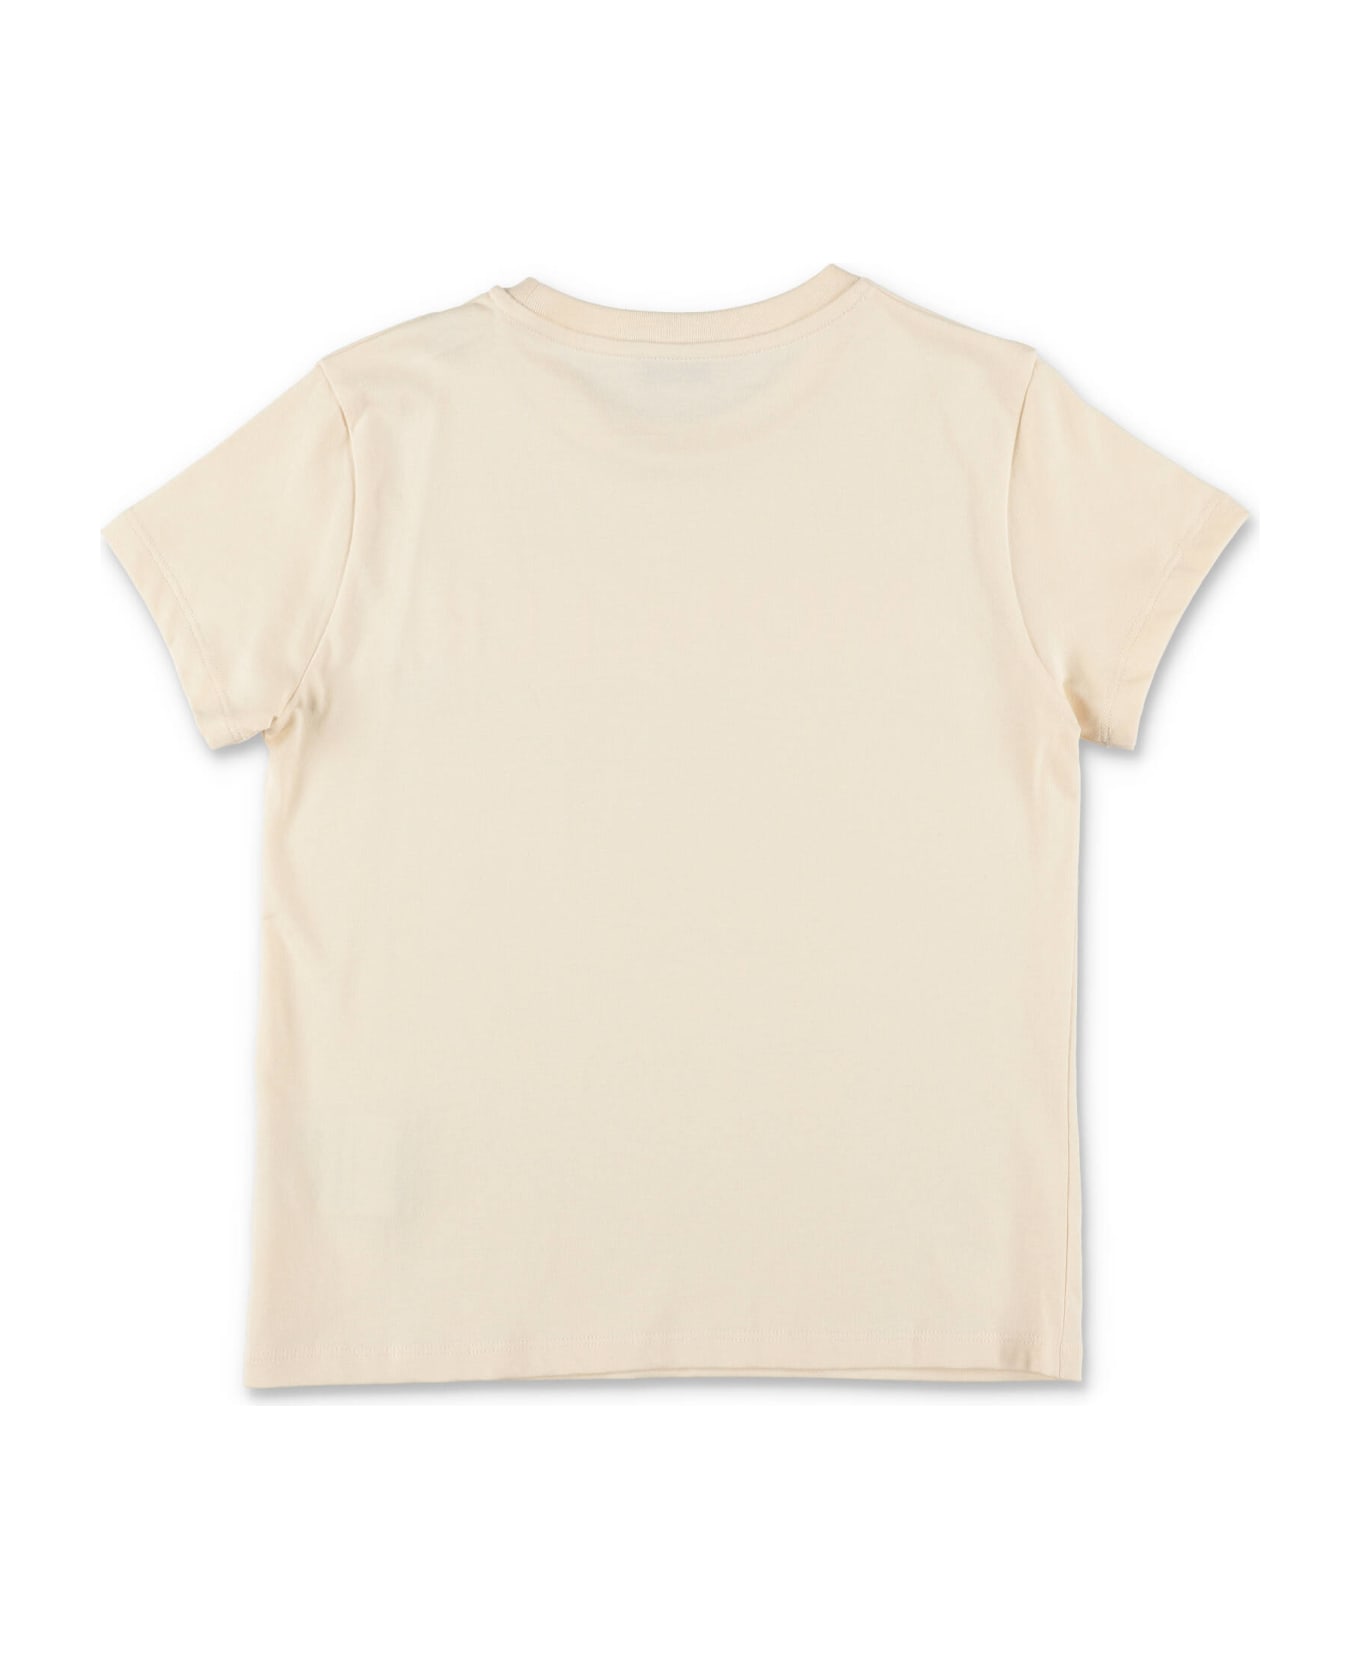 Moncler T-shirt Crema In Jersey Di Cotone Bambina - Crema